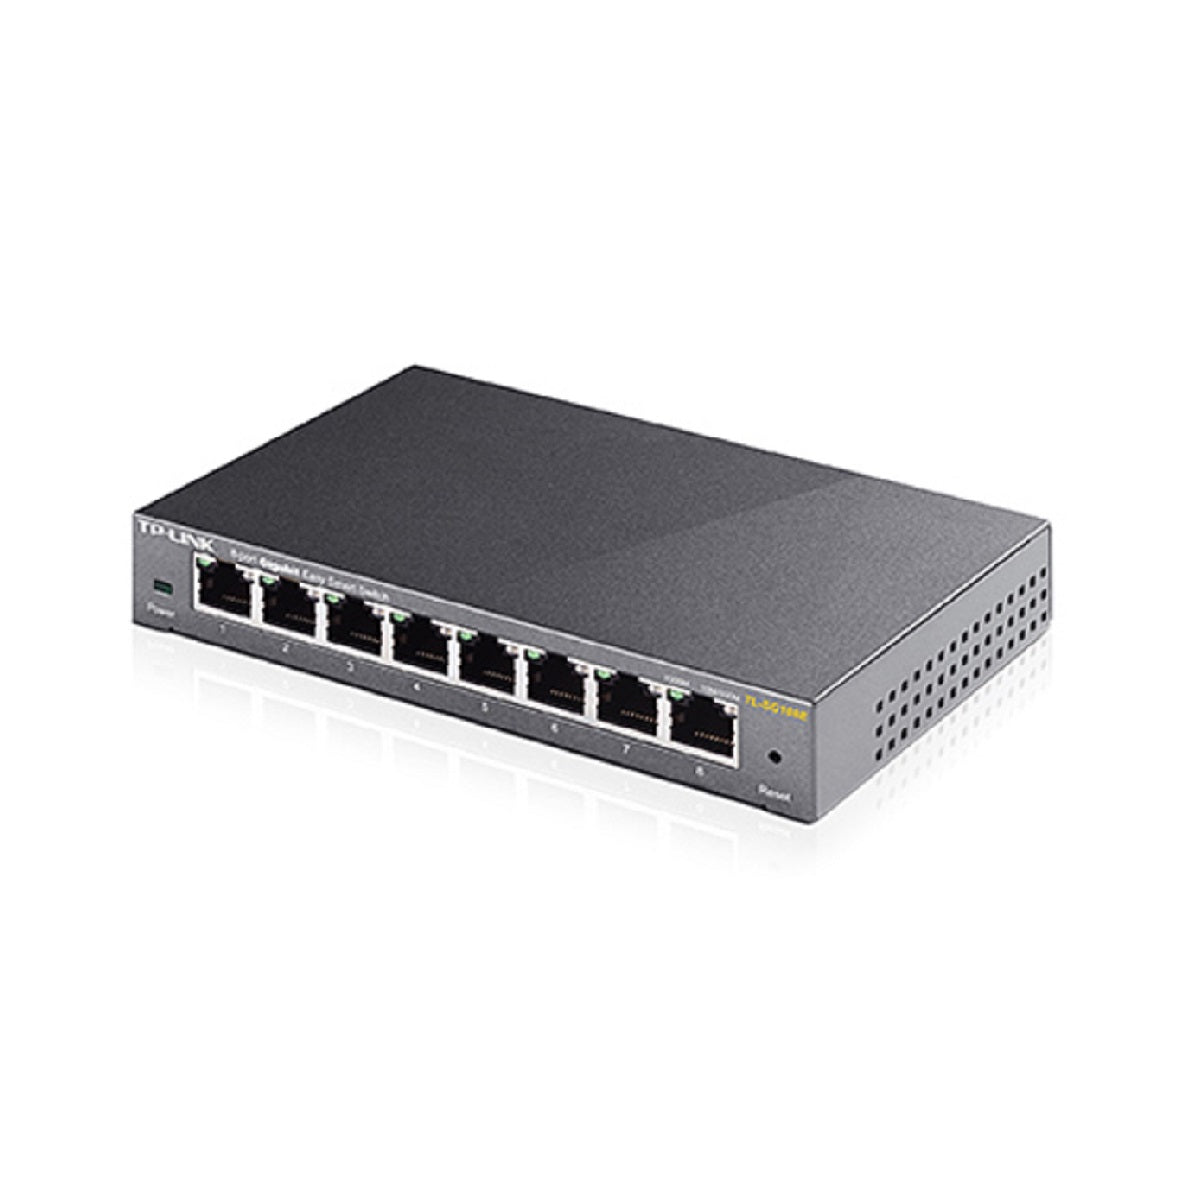 TP-LINK TL-SG108E 8 Port Gigabit Switch